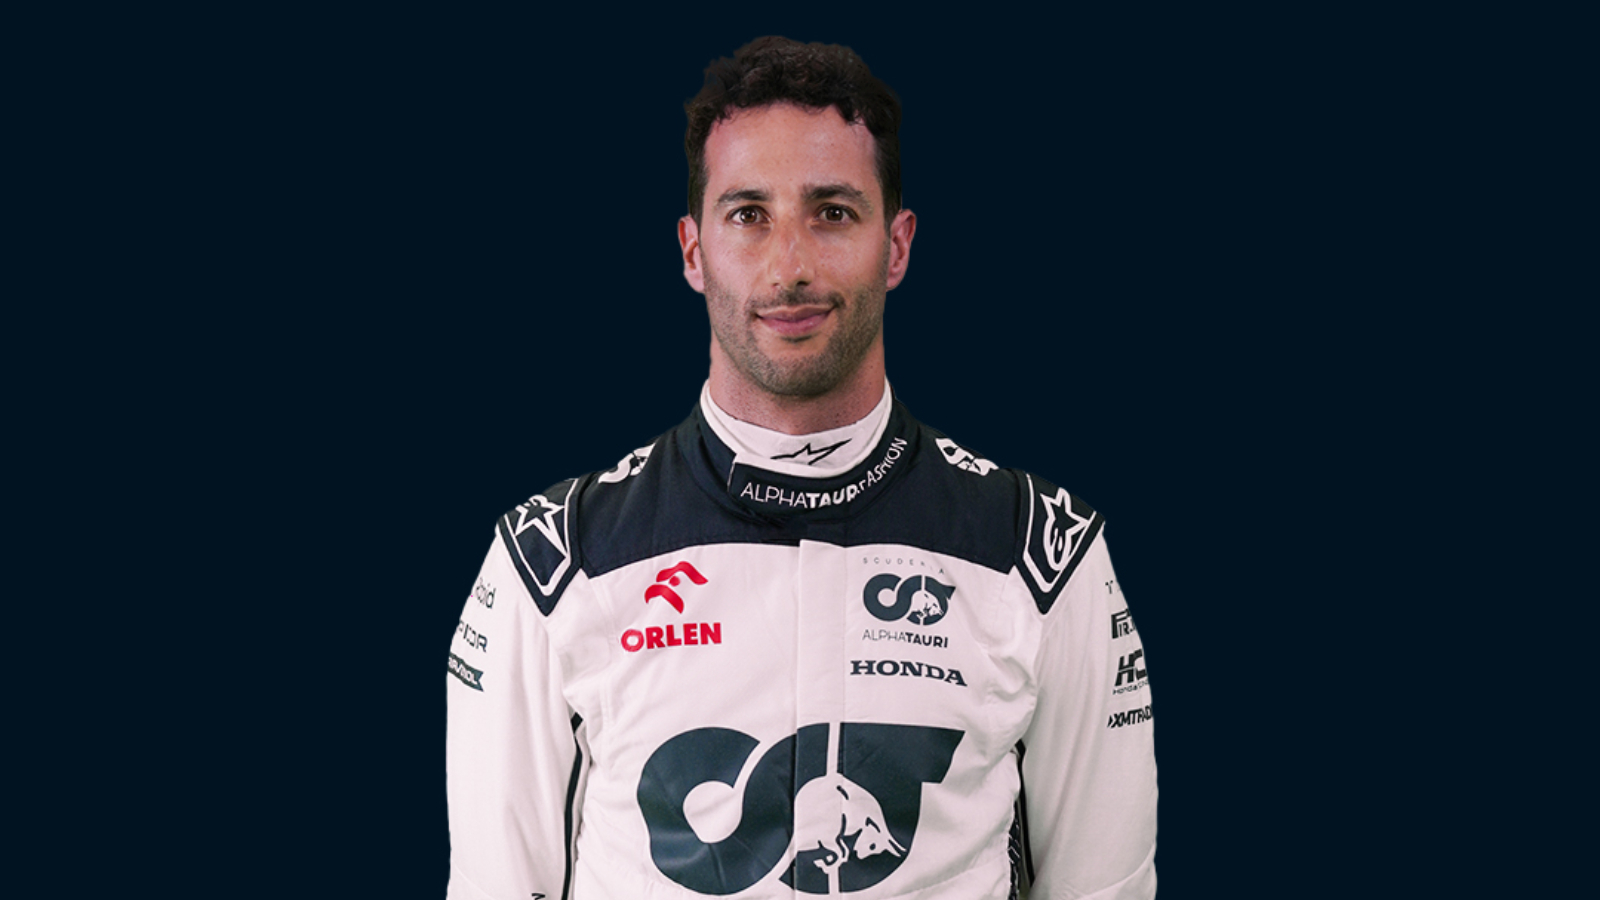 Daniel Ricciardo in his AlphaTauri race suit.